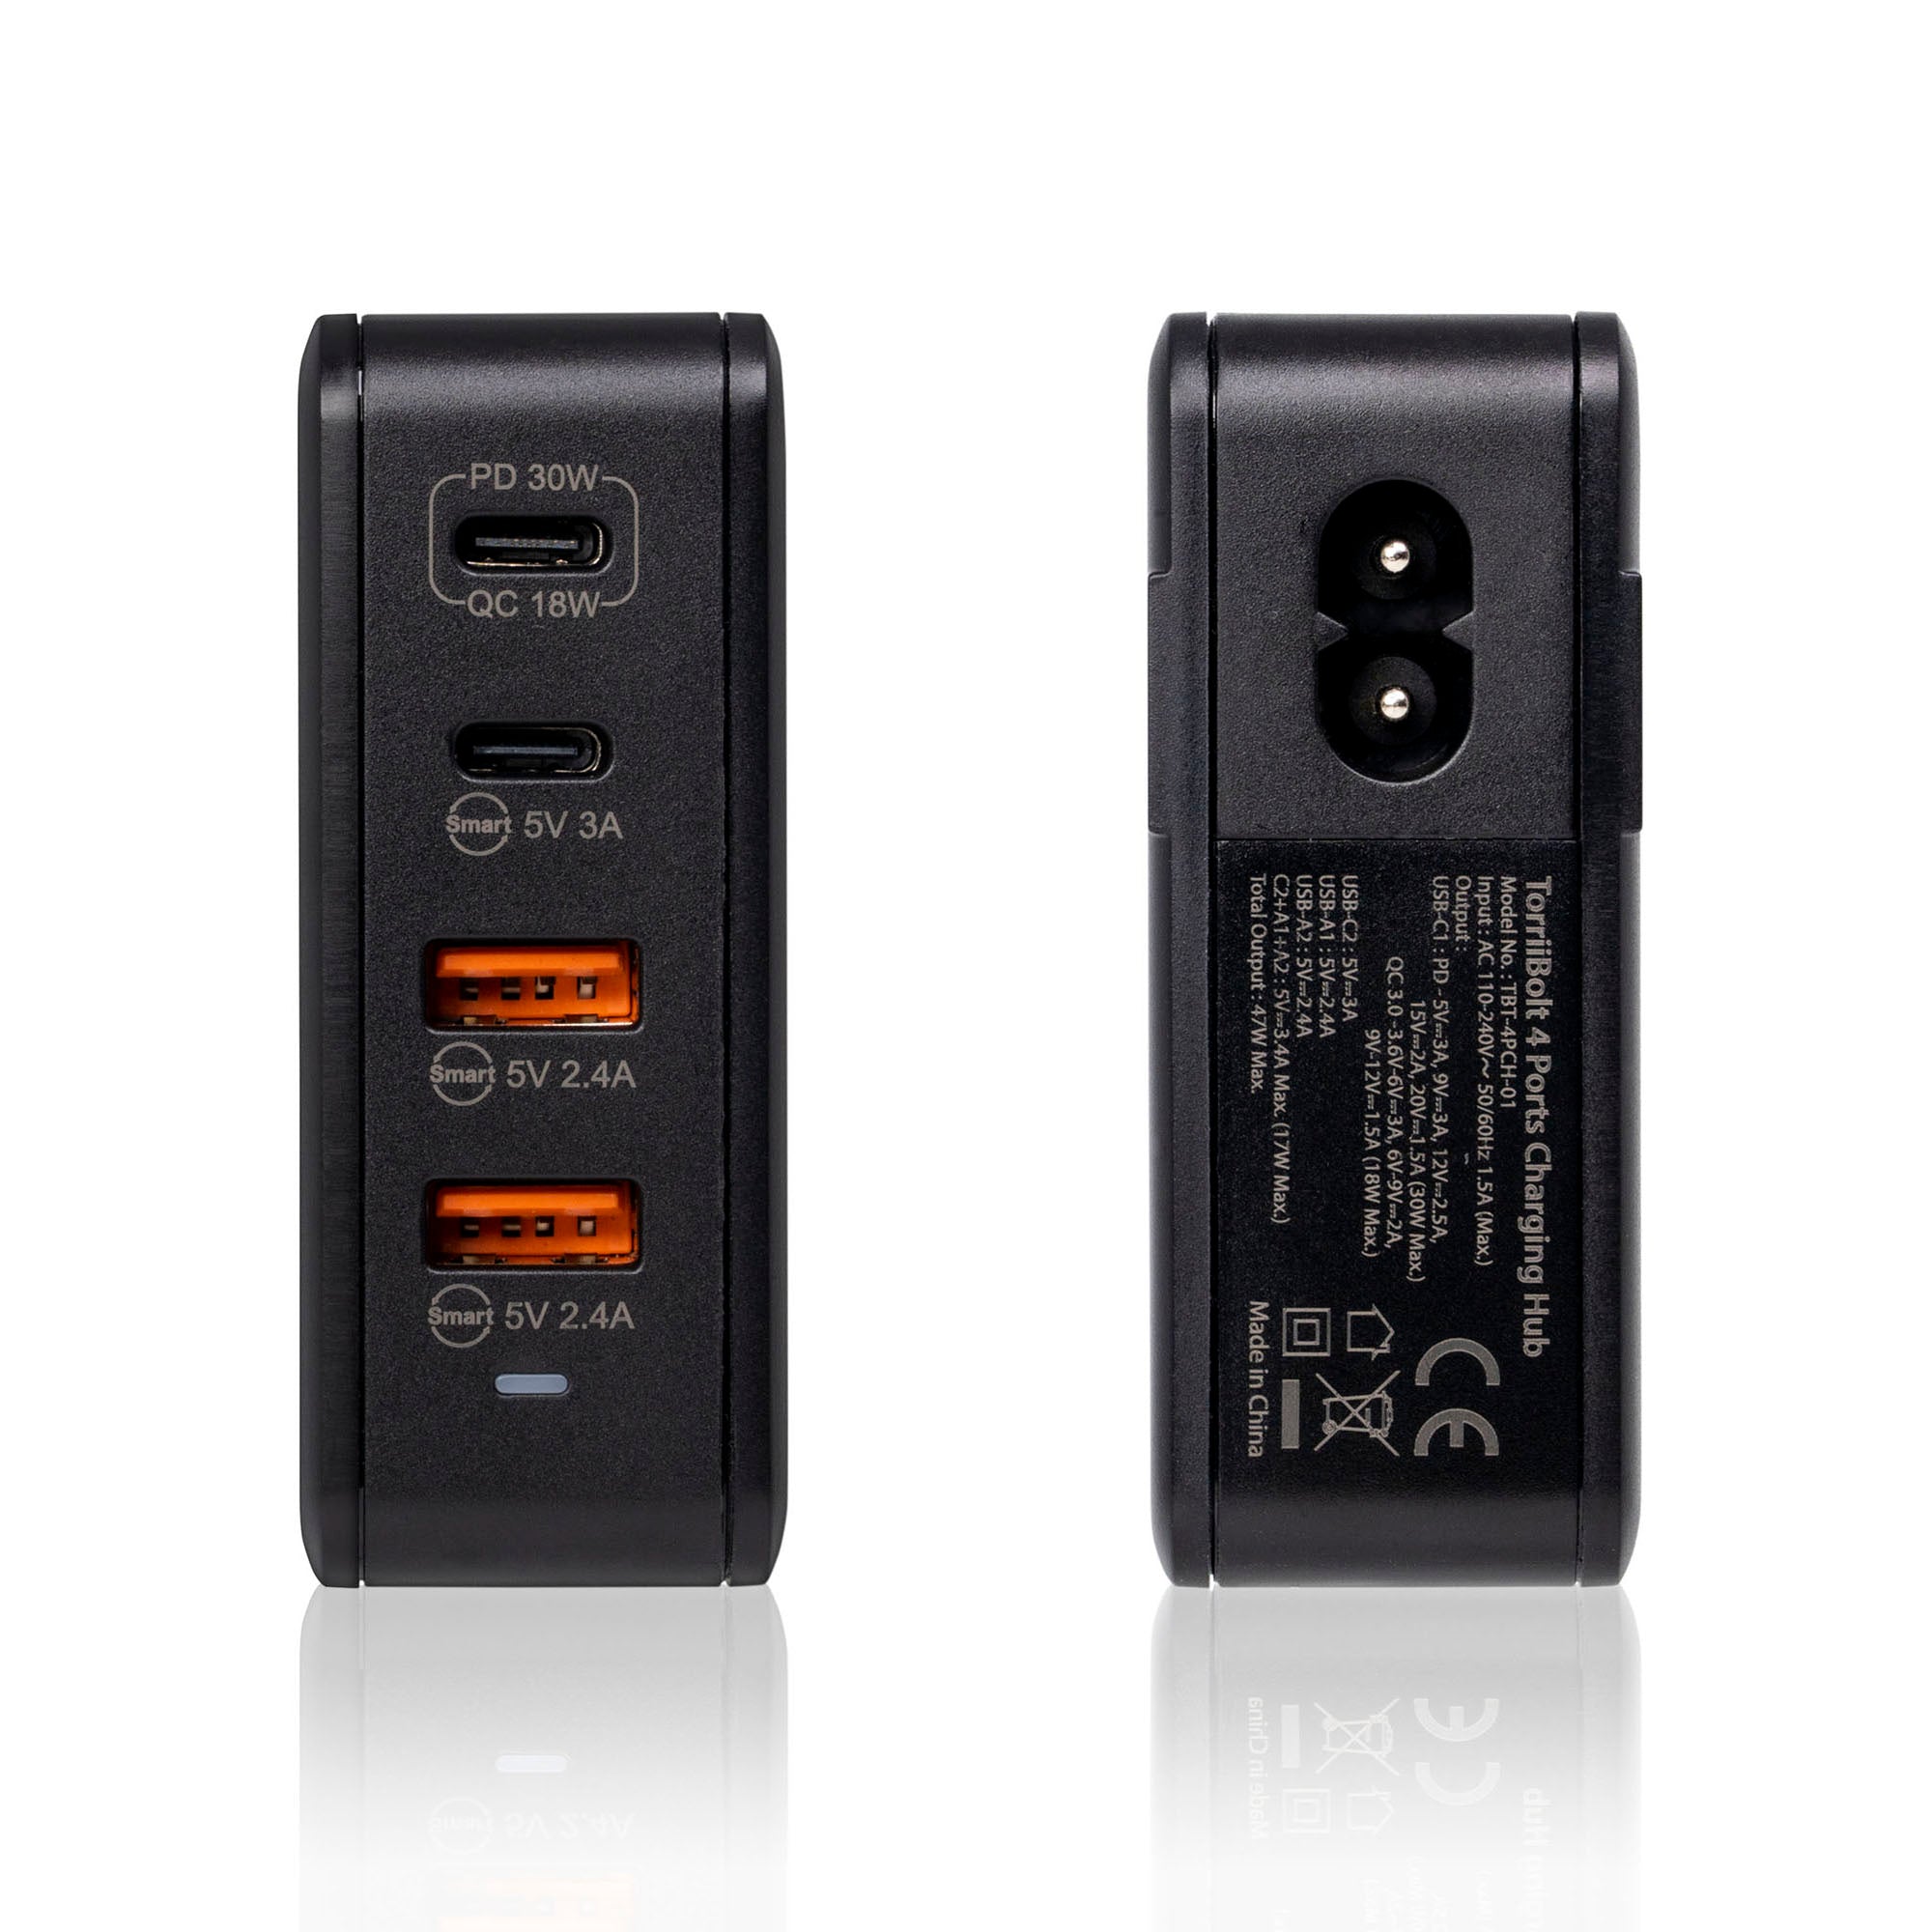 Torrii Bolt 4 Port Charging Hub with 2 USB-C  & 2 USB-A QC 3.0 - Black